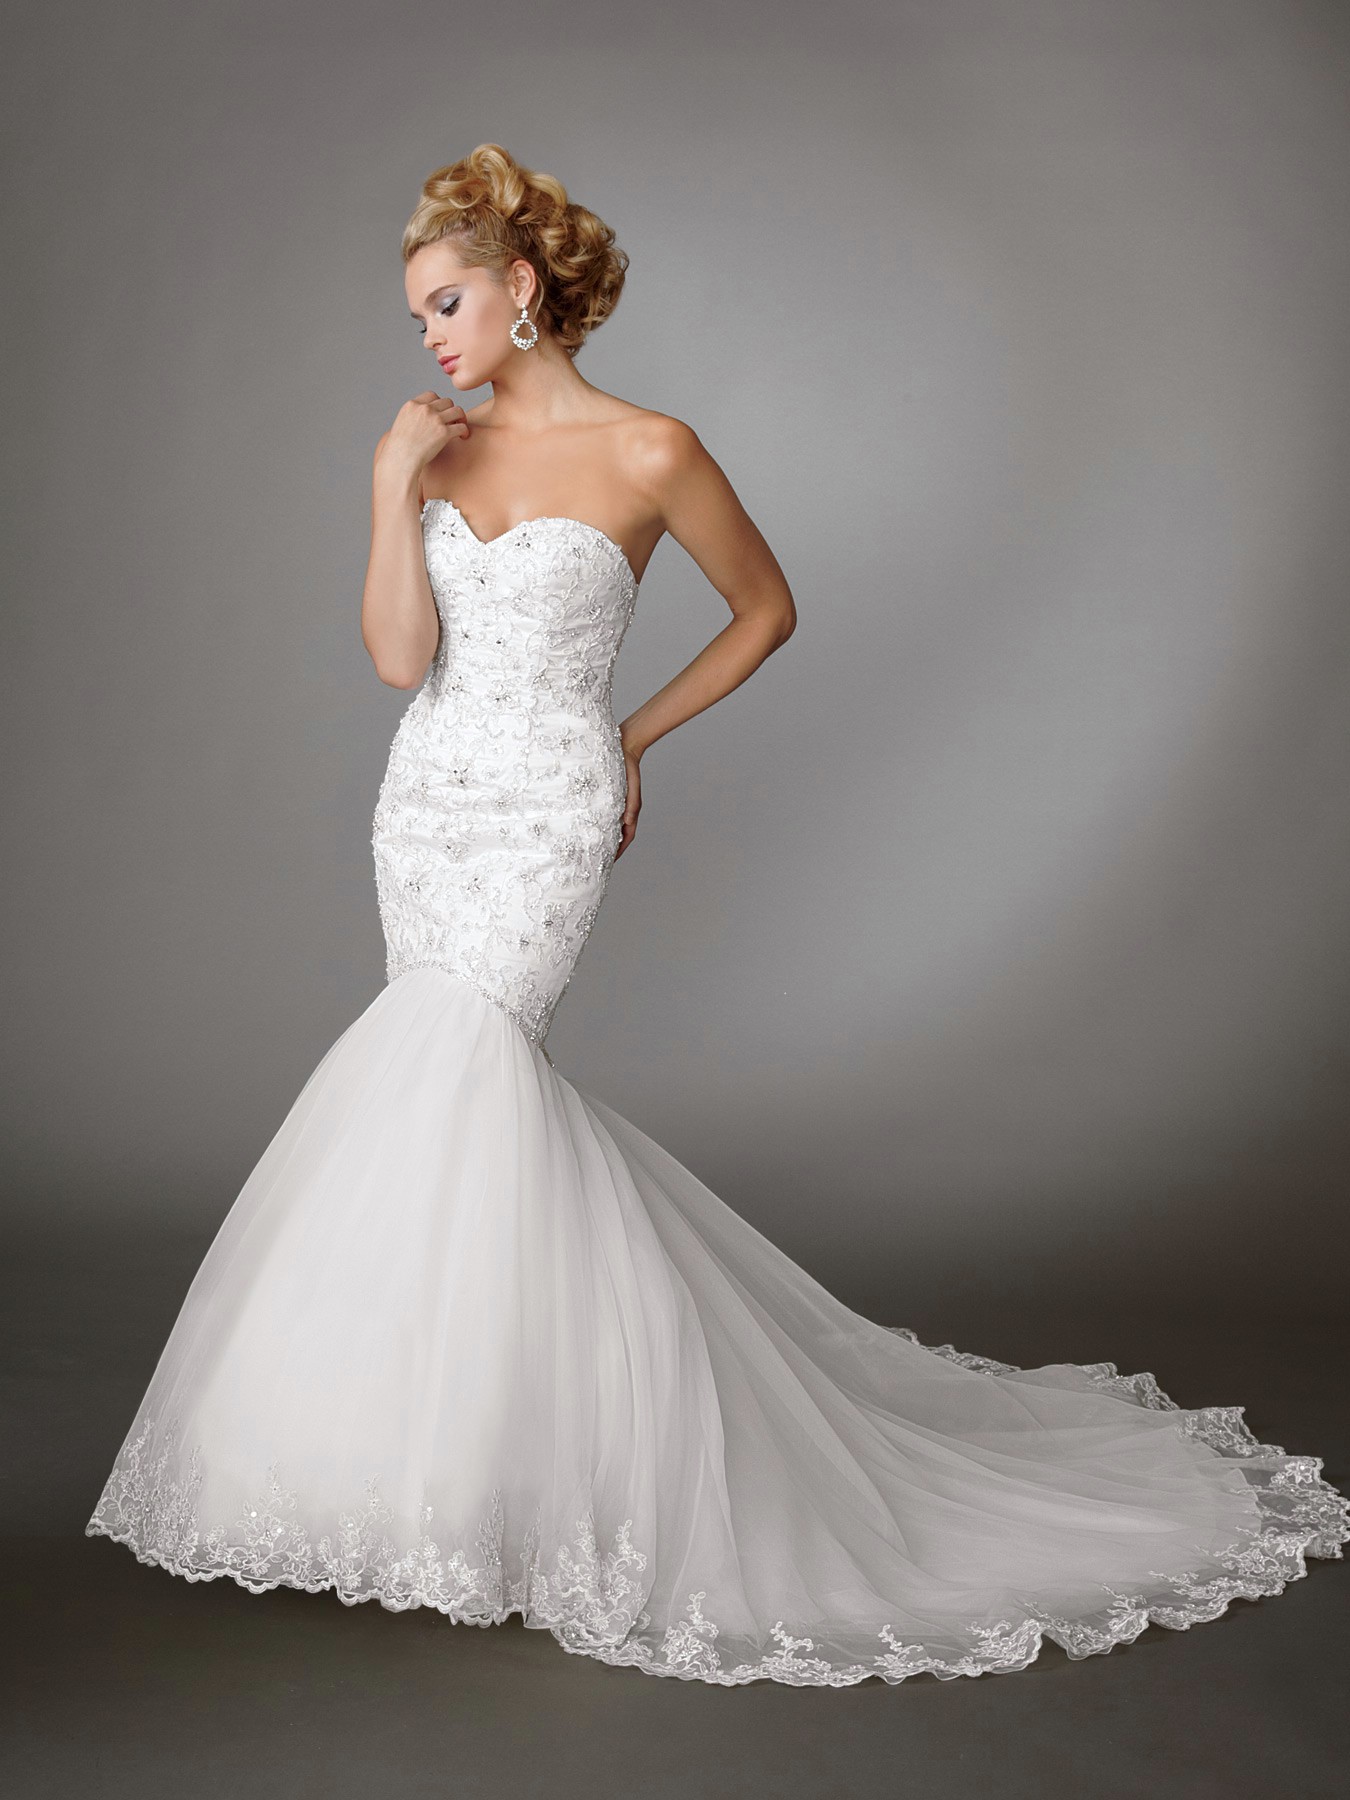 Mermaid Wedding Dresses An Elegant Choice For Brides 7938